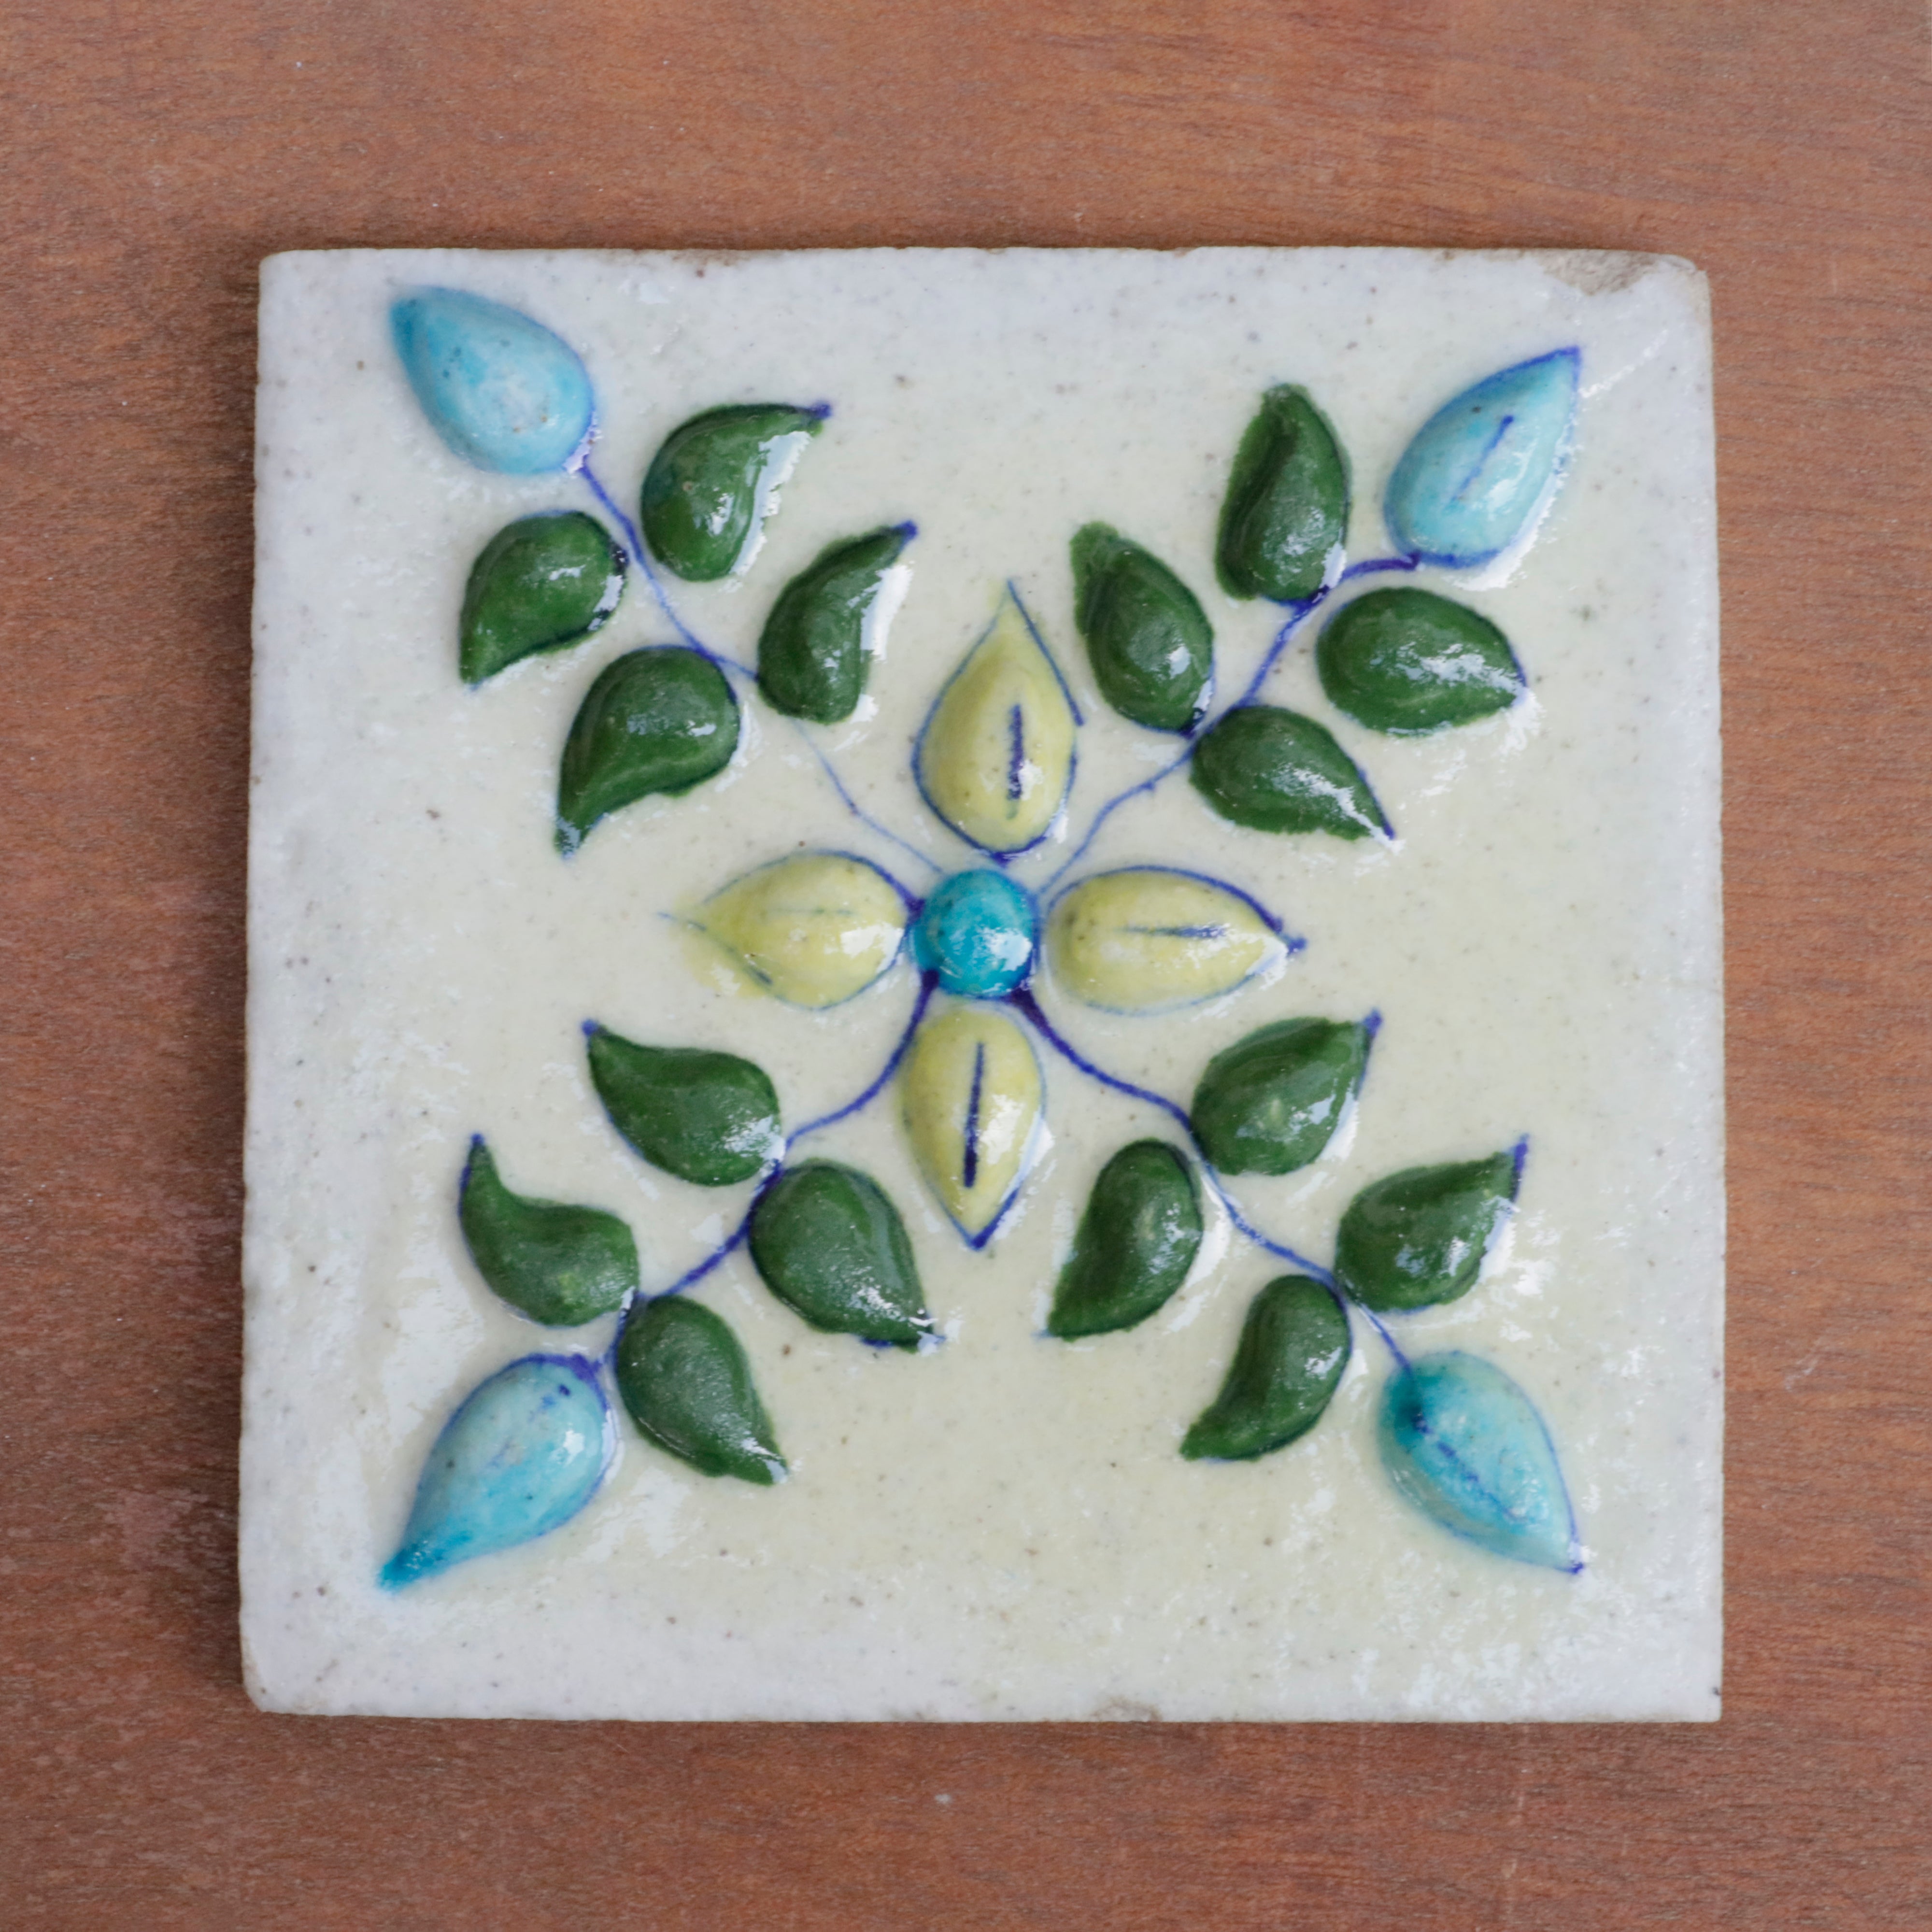 Montage Antique Embossed Flower Designed Ceramic Square Tile Set of 2 Ceramic Tile